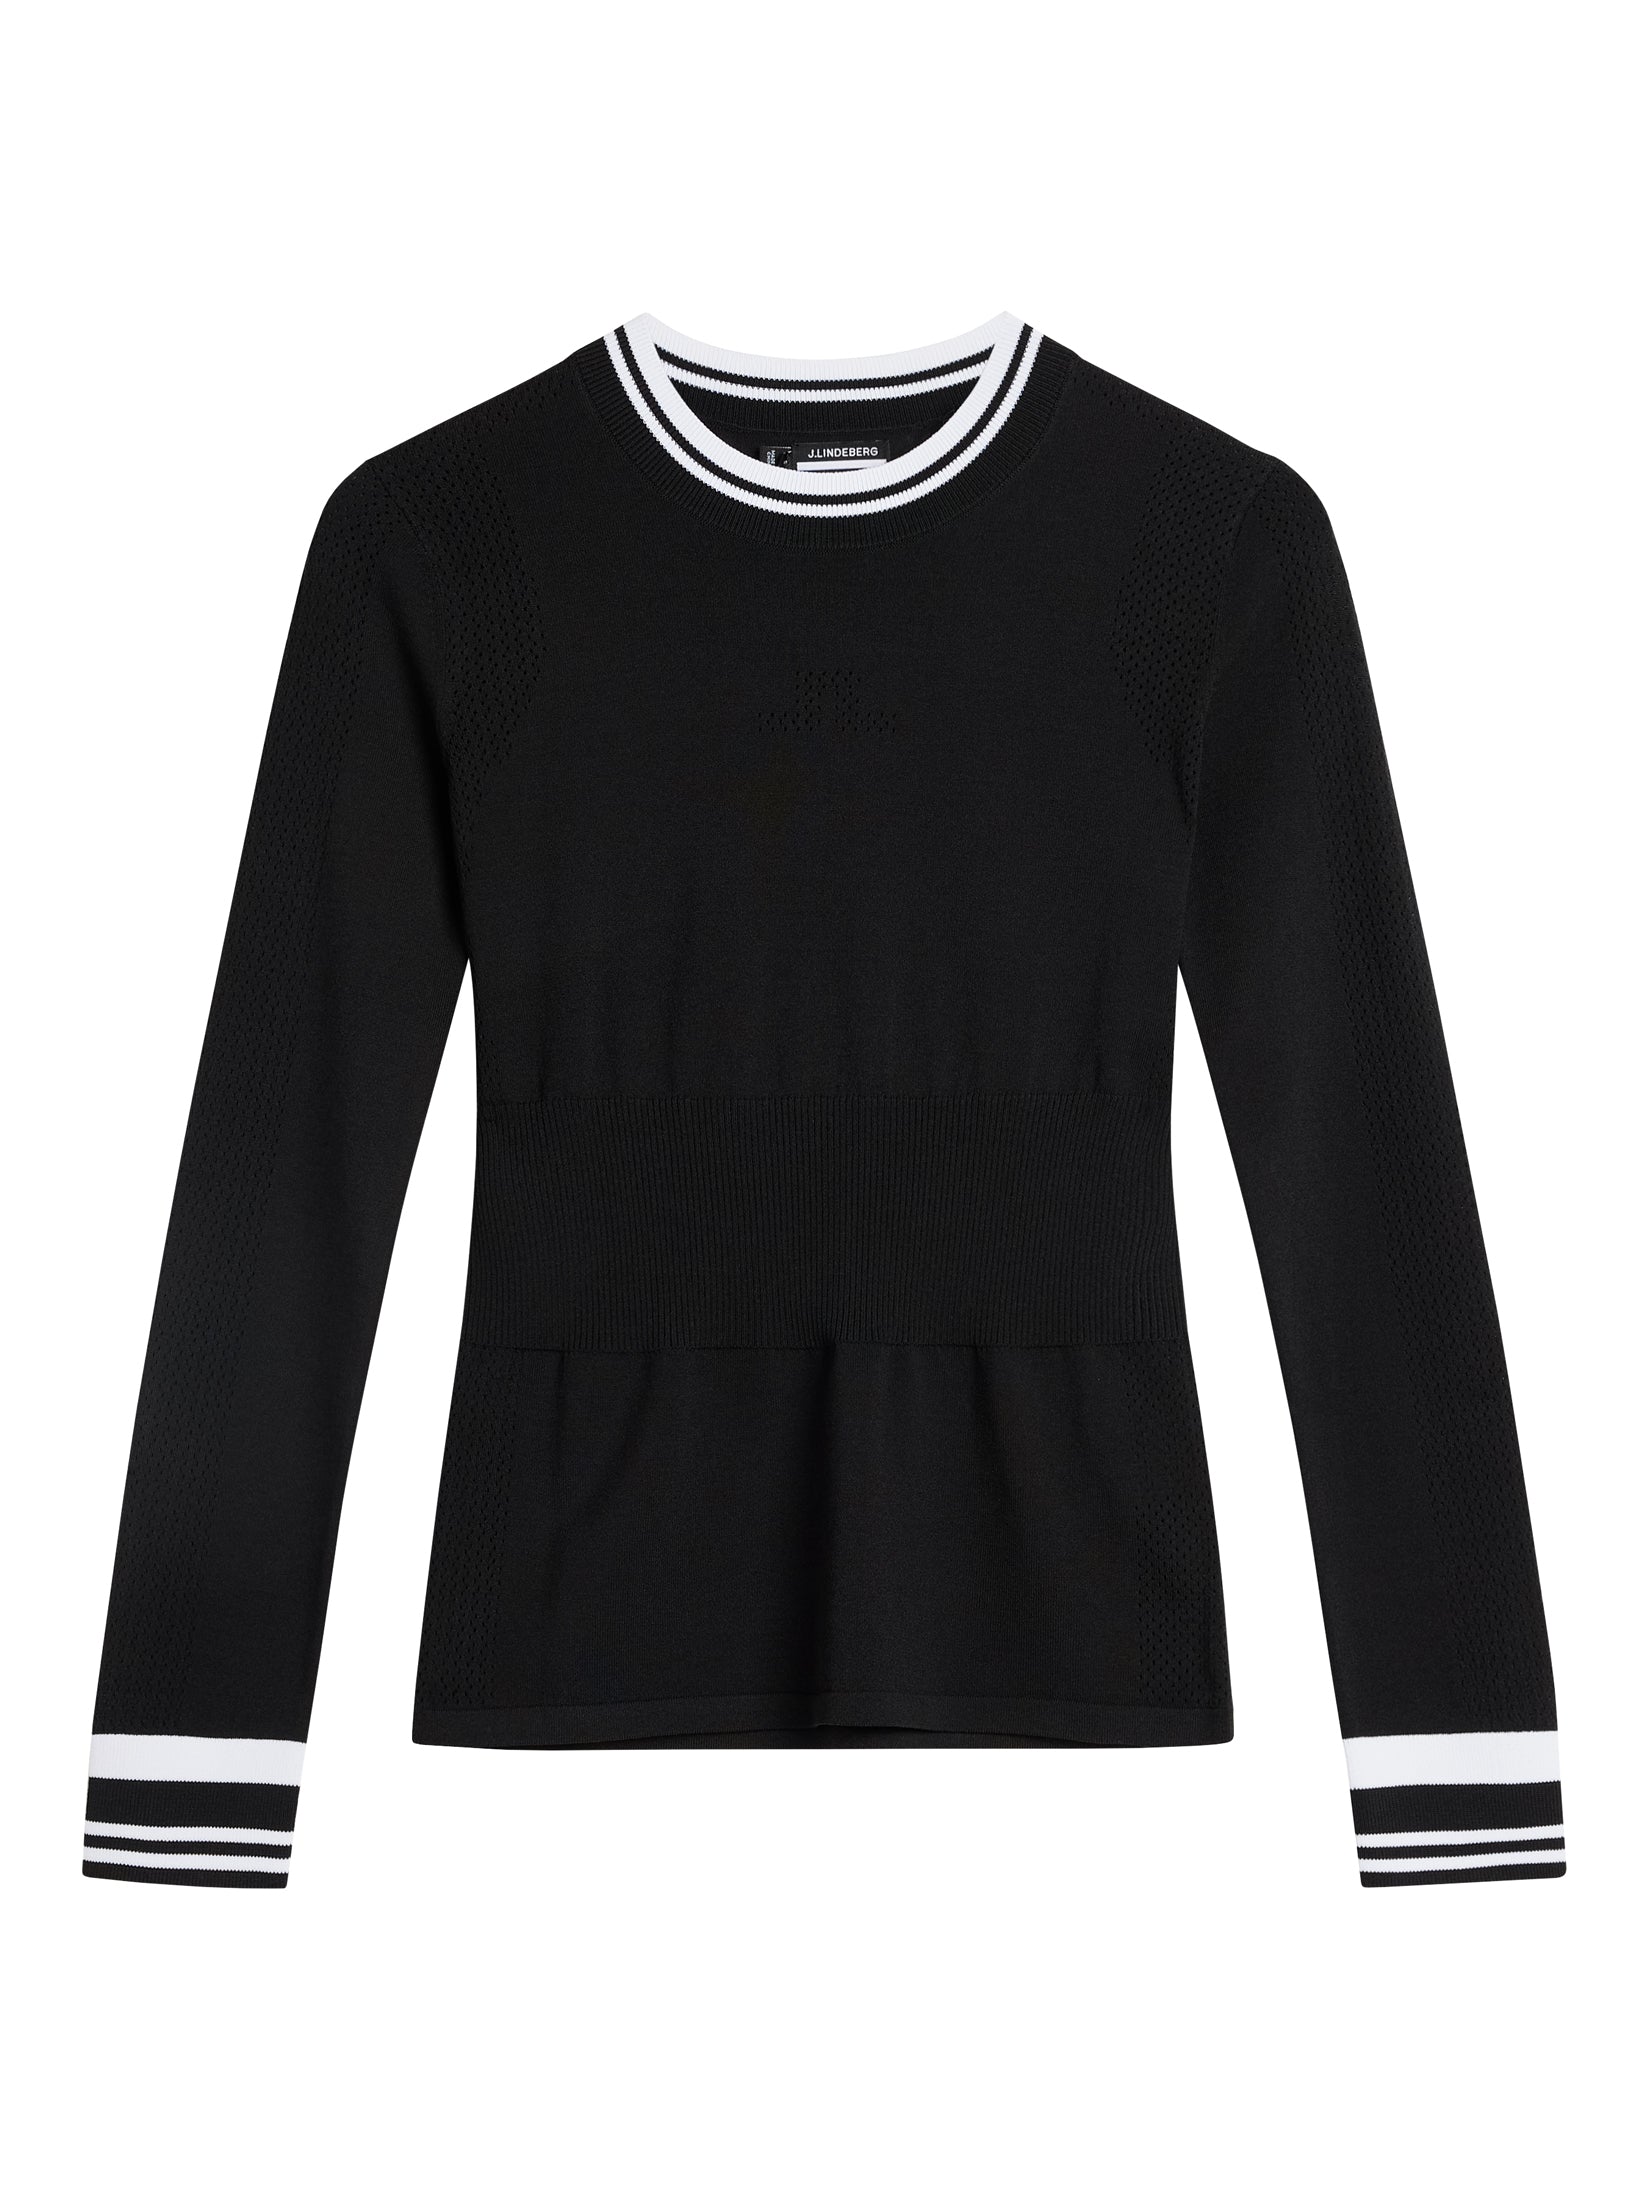 Micro Check Knitted Sweater / Black JL monogram check – J.Lindeberg